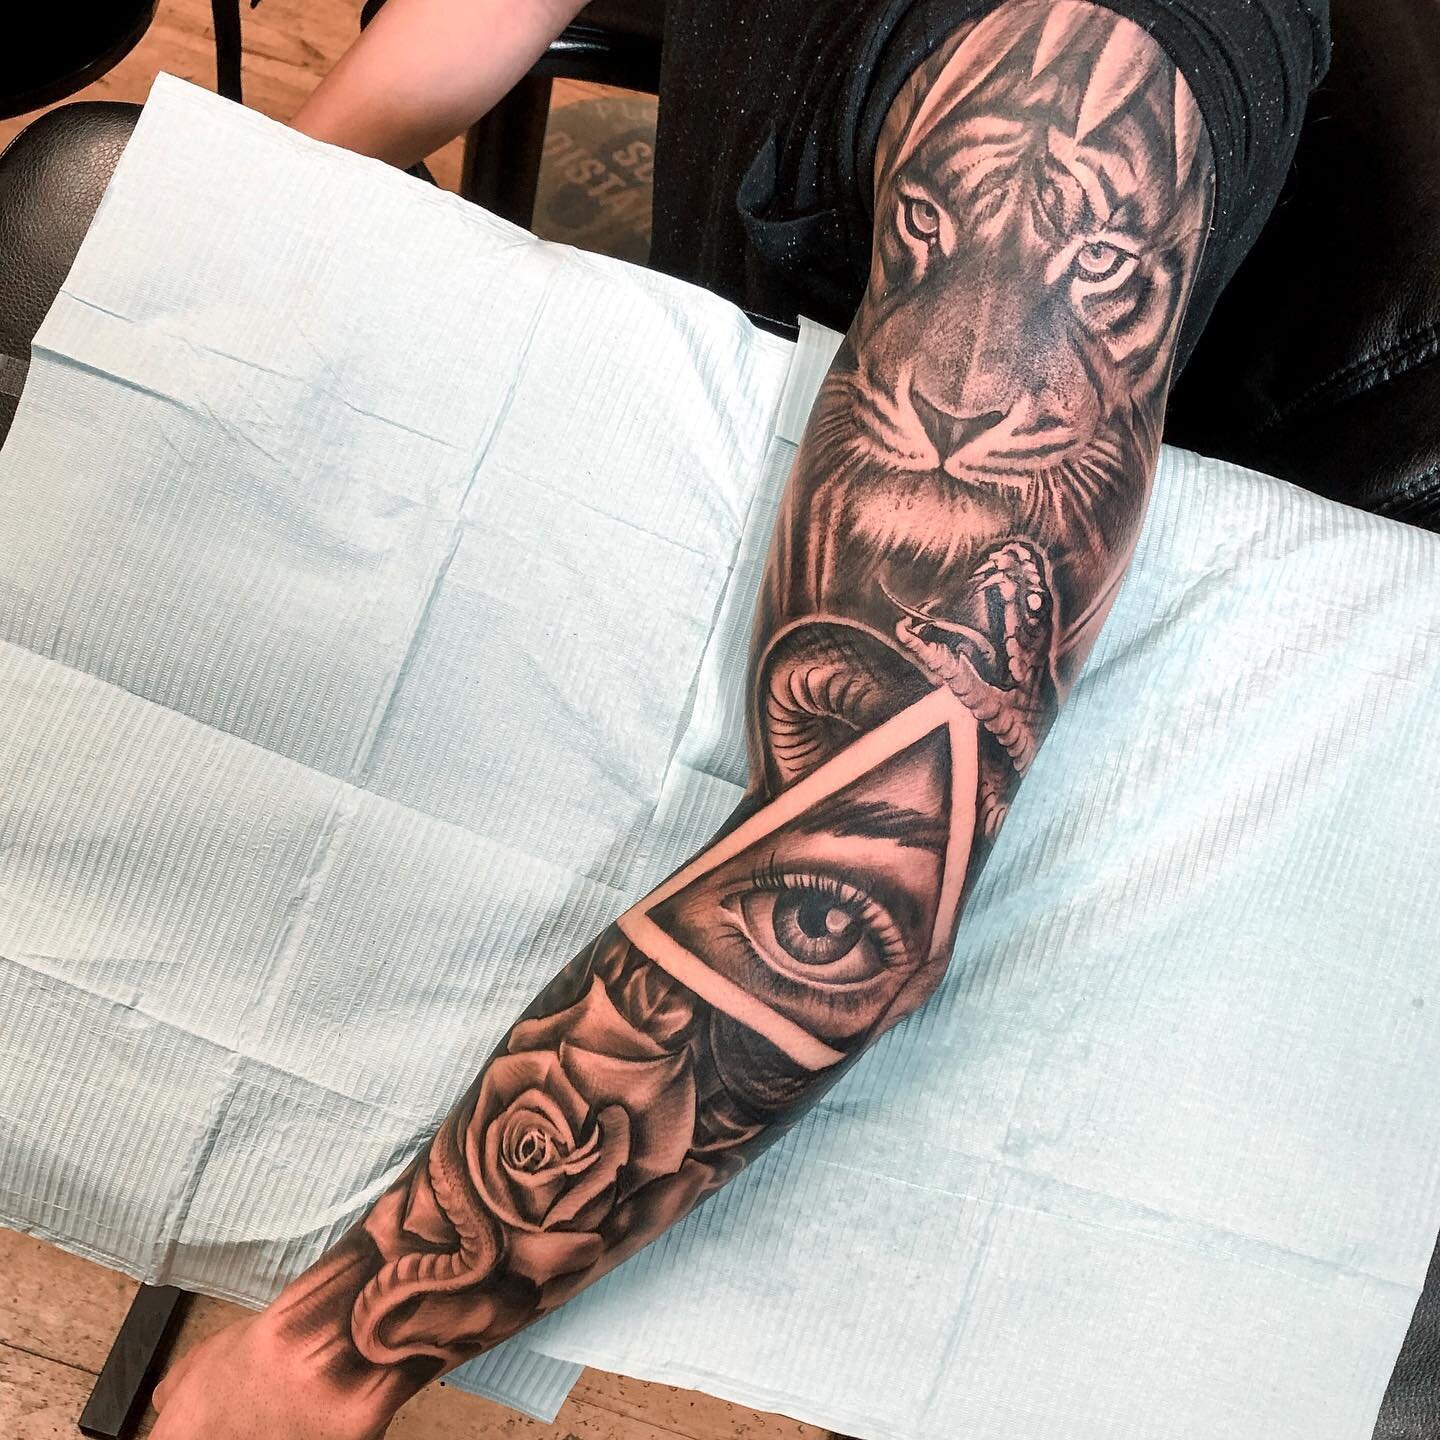 👉7hrs👈
Done using @eldiabloneedles 
.
.
.

#fullsleevetattoo #tattoo #tattoos #ink #inked #tattooart #tattooideas #traditional #tattoodesign #tattooed #tattoolife #kylefreshink #tattooink #blackandgreytattoo #blackworktattoo #tattooing #blackandgre